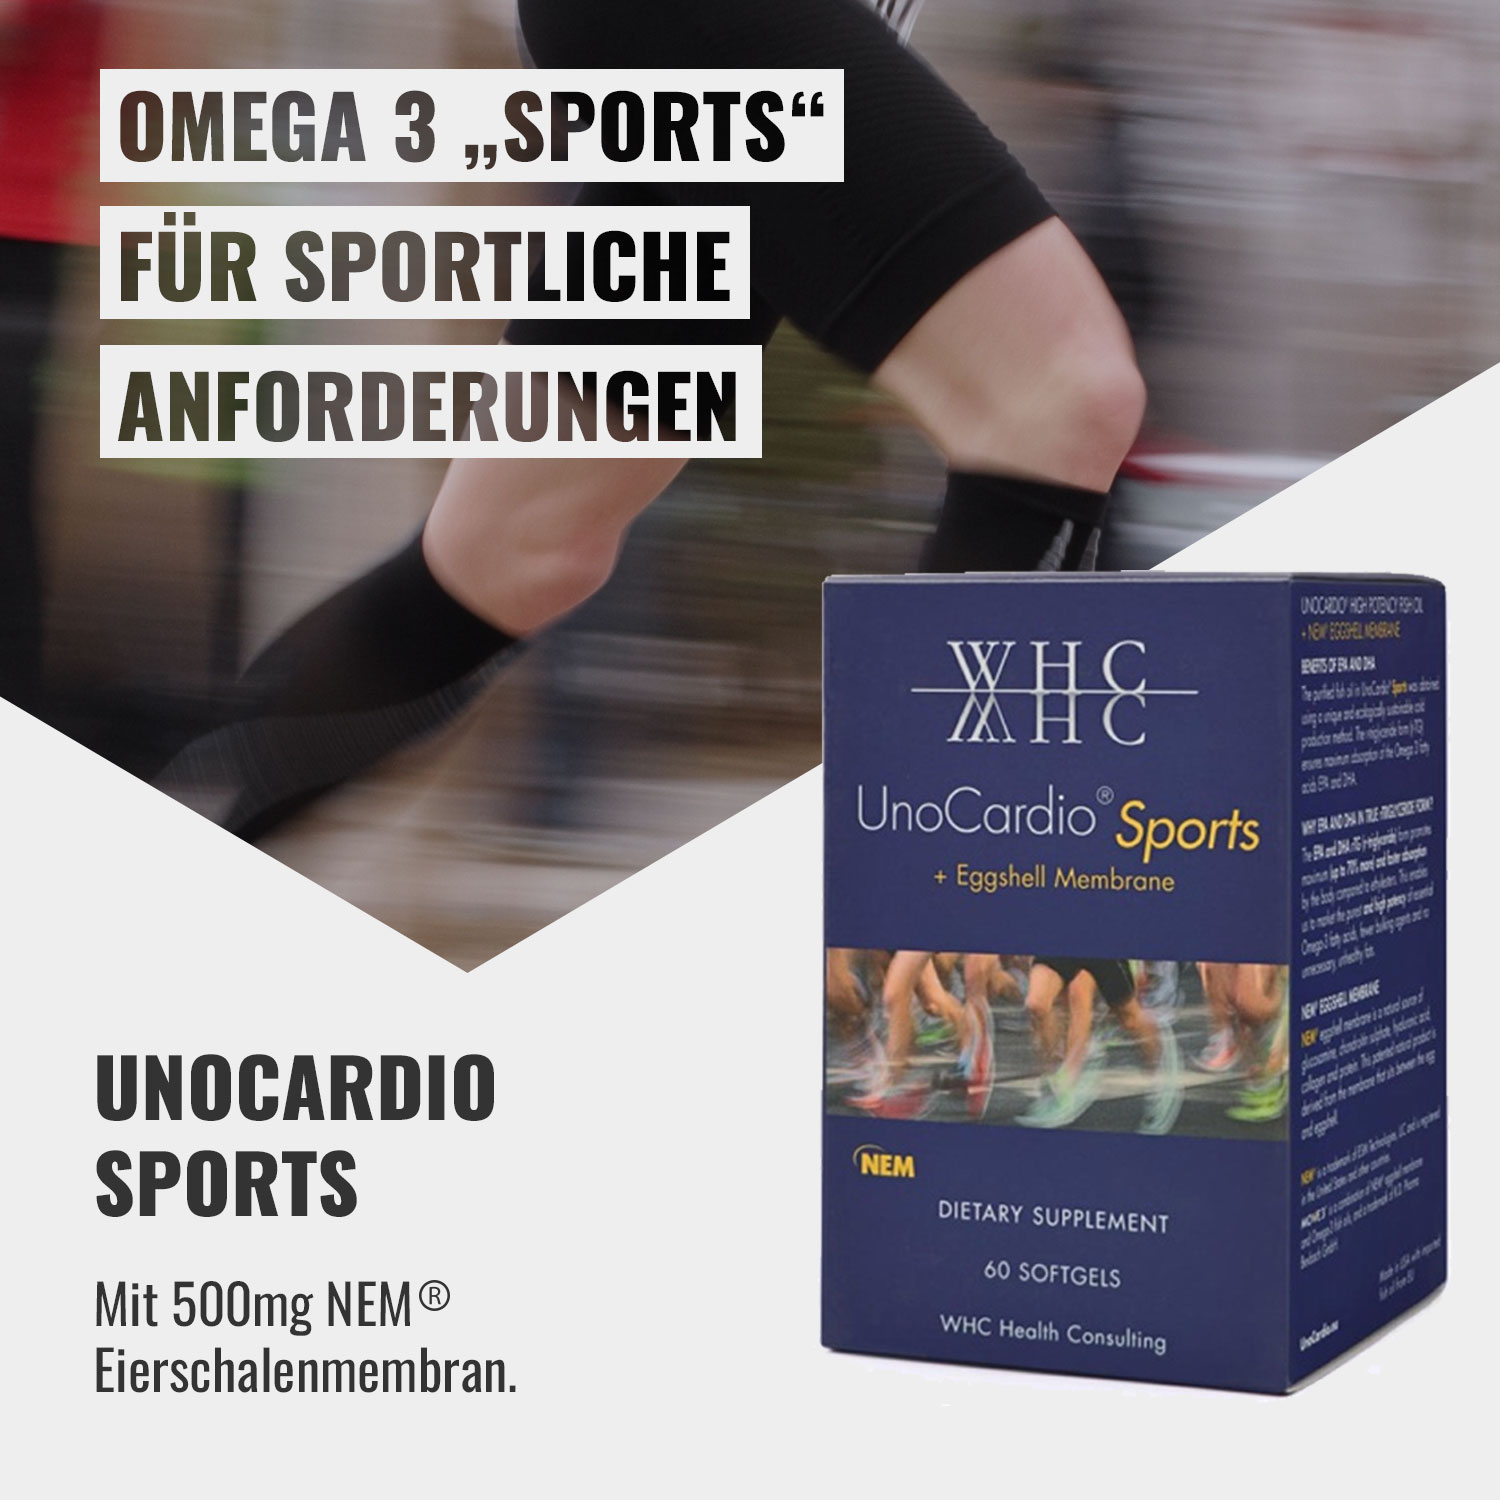 WHC Unocardio Sports Omega 3